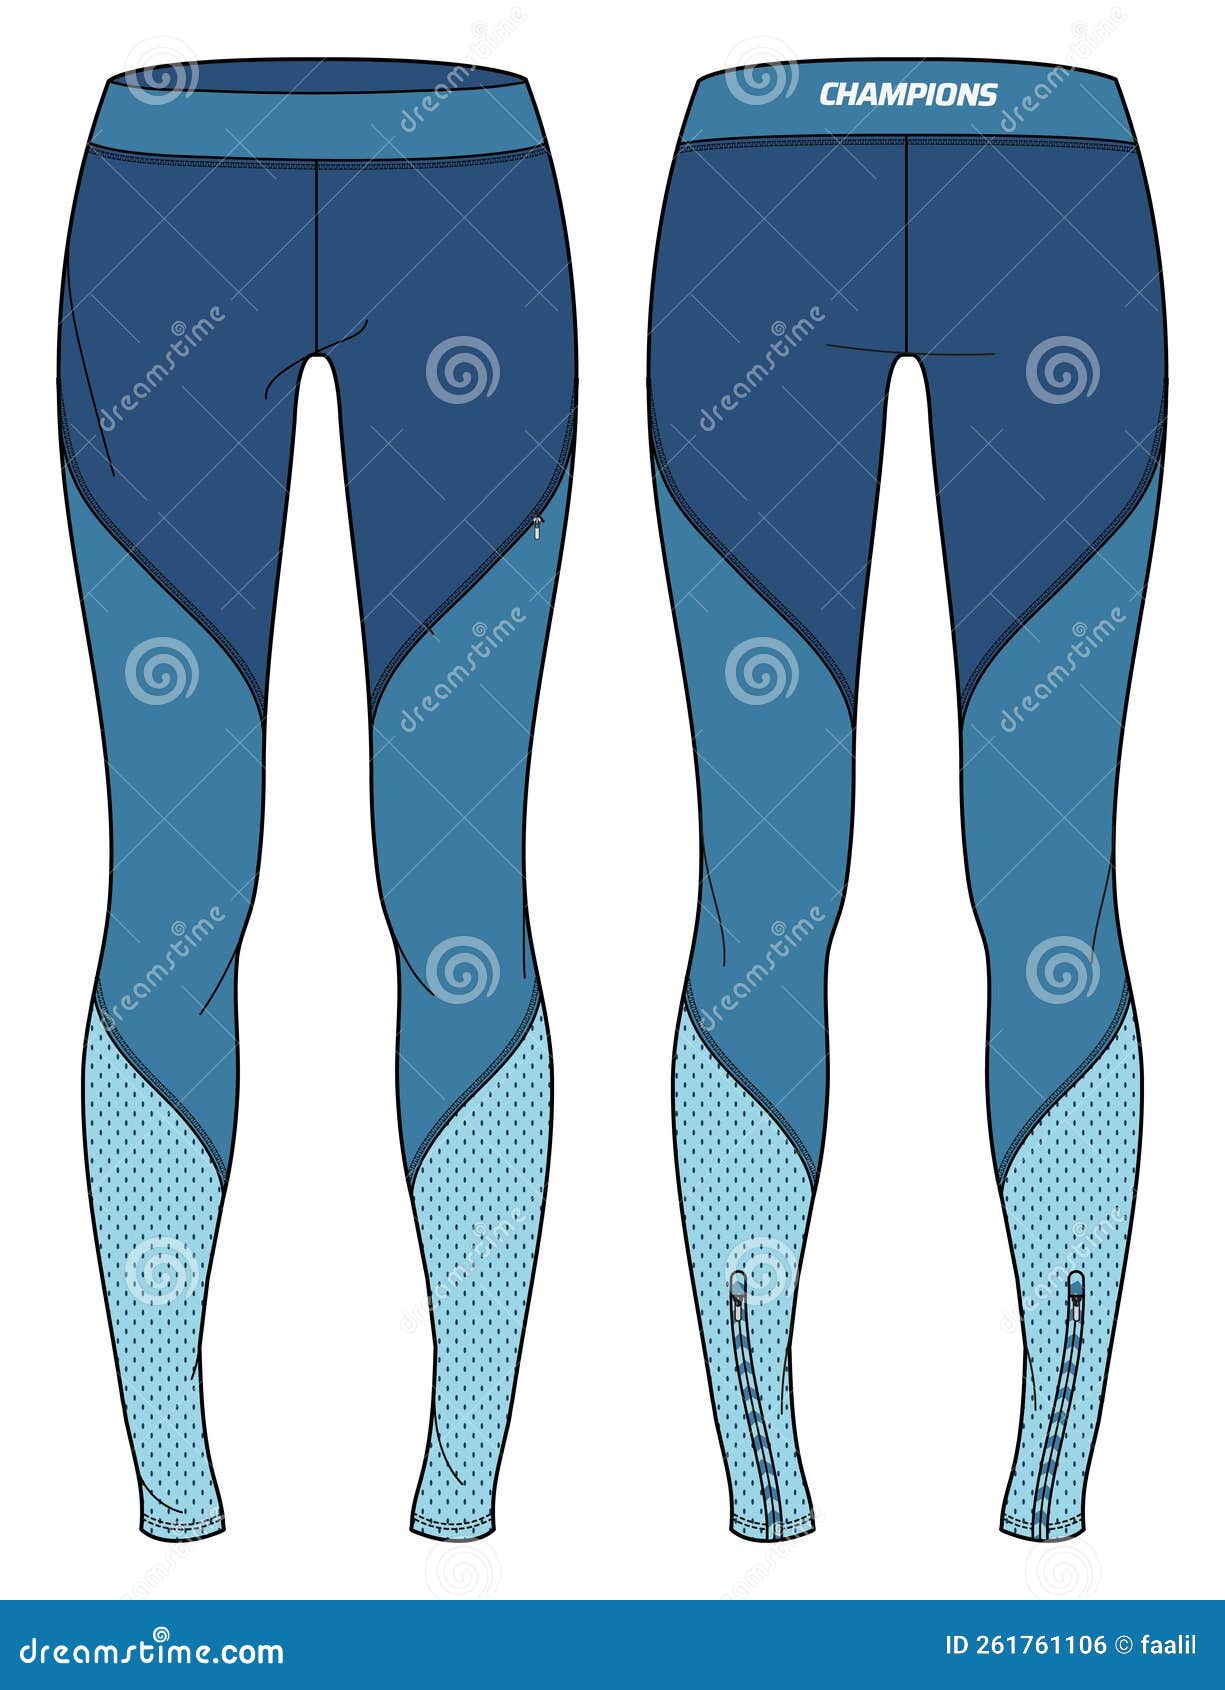 https://thumbs.dreamstime.com/z/women-sports-running-tights-leggings-pants-design-flat-sketch-vector-illustration-compression-concept-front-back-view-261761106.jpg